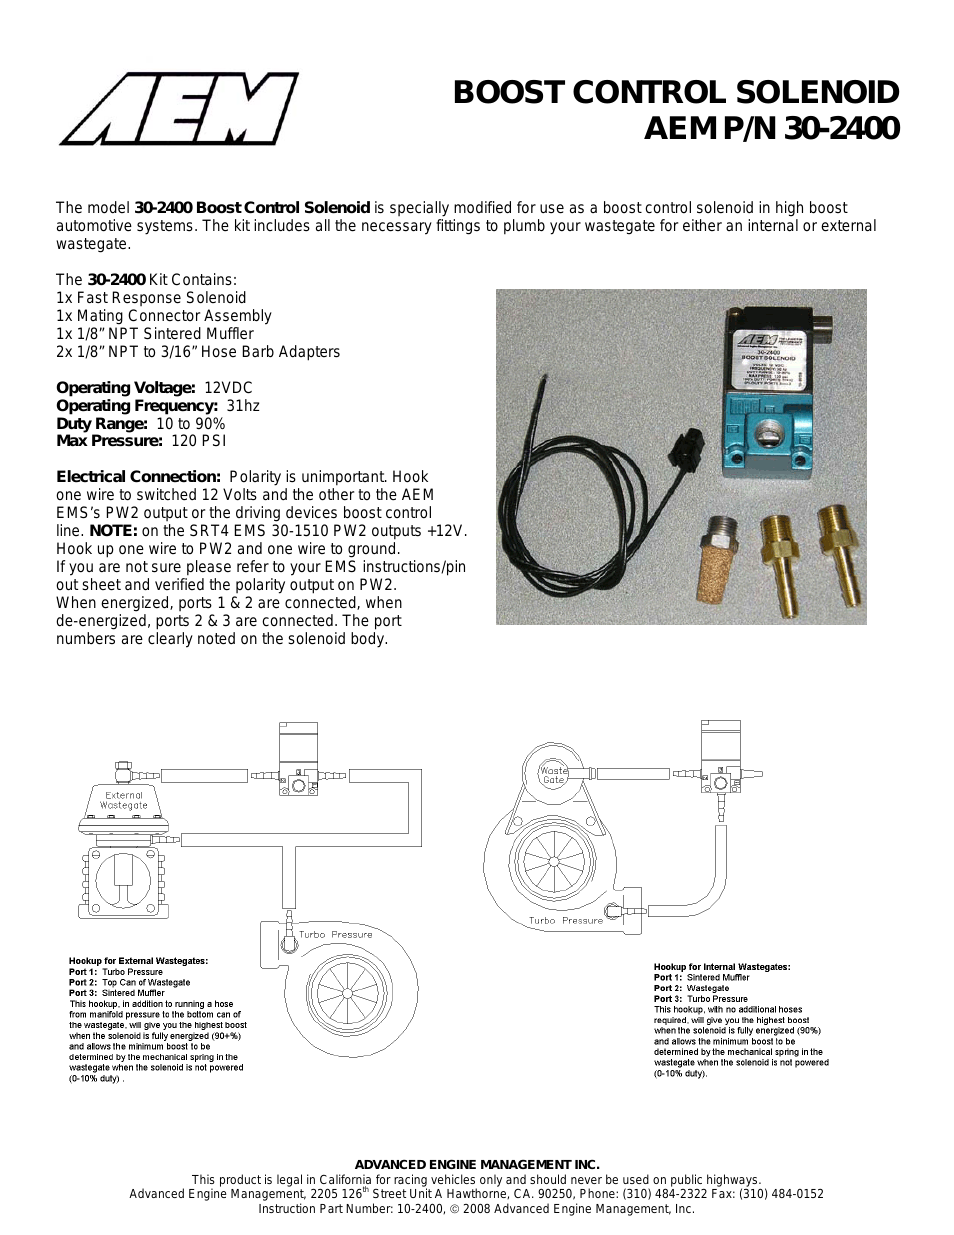 30-2400 Boost Control Solenoid Kit